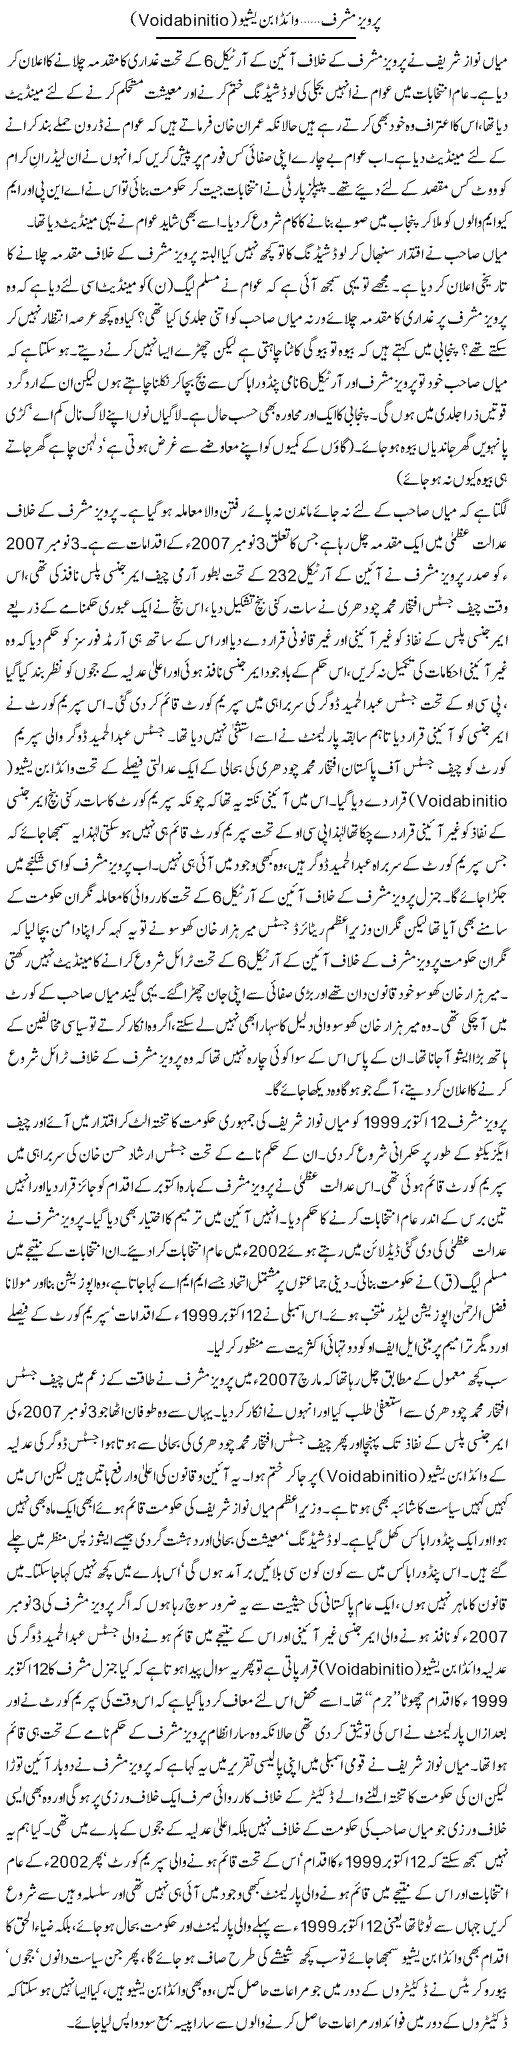 Pervez Musharraf Videabinitio | Latif Choudhry | Daily Urdu Columns